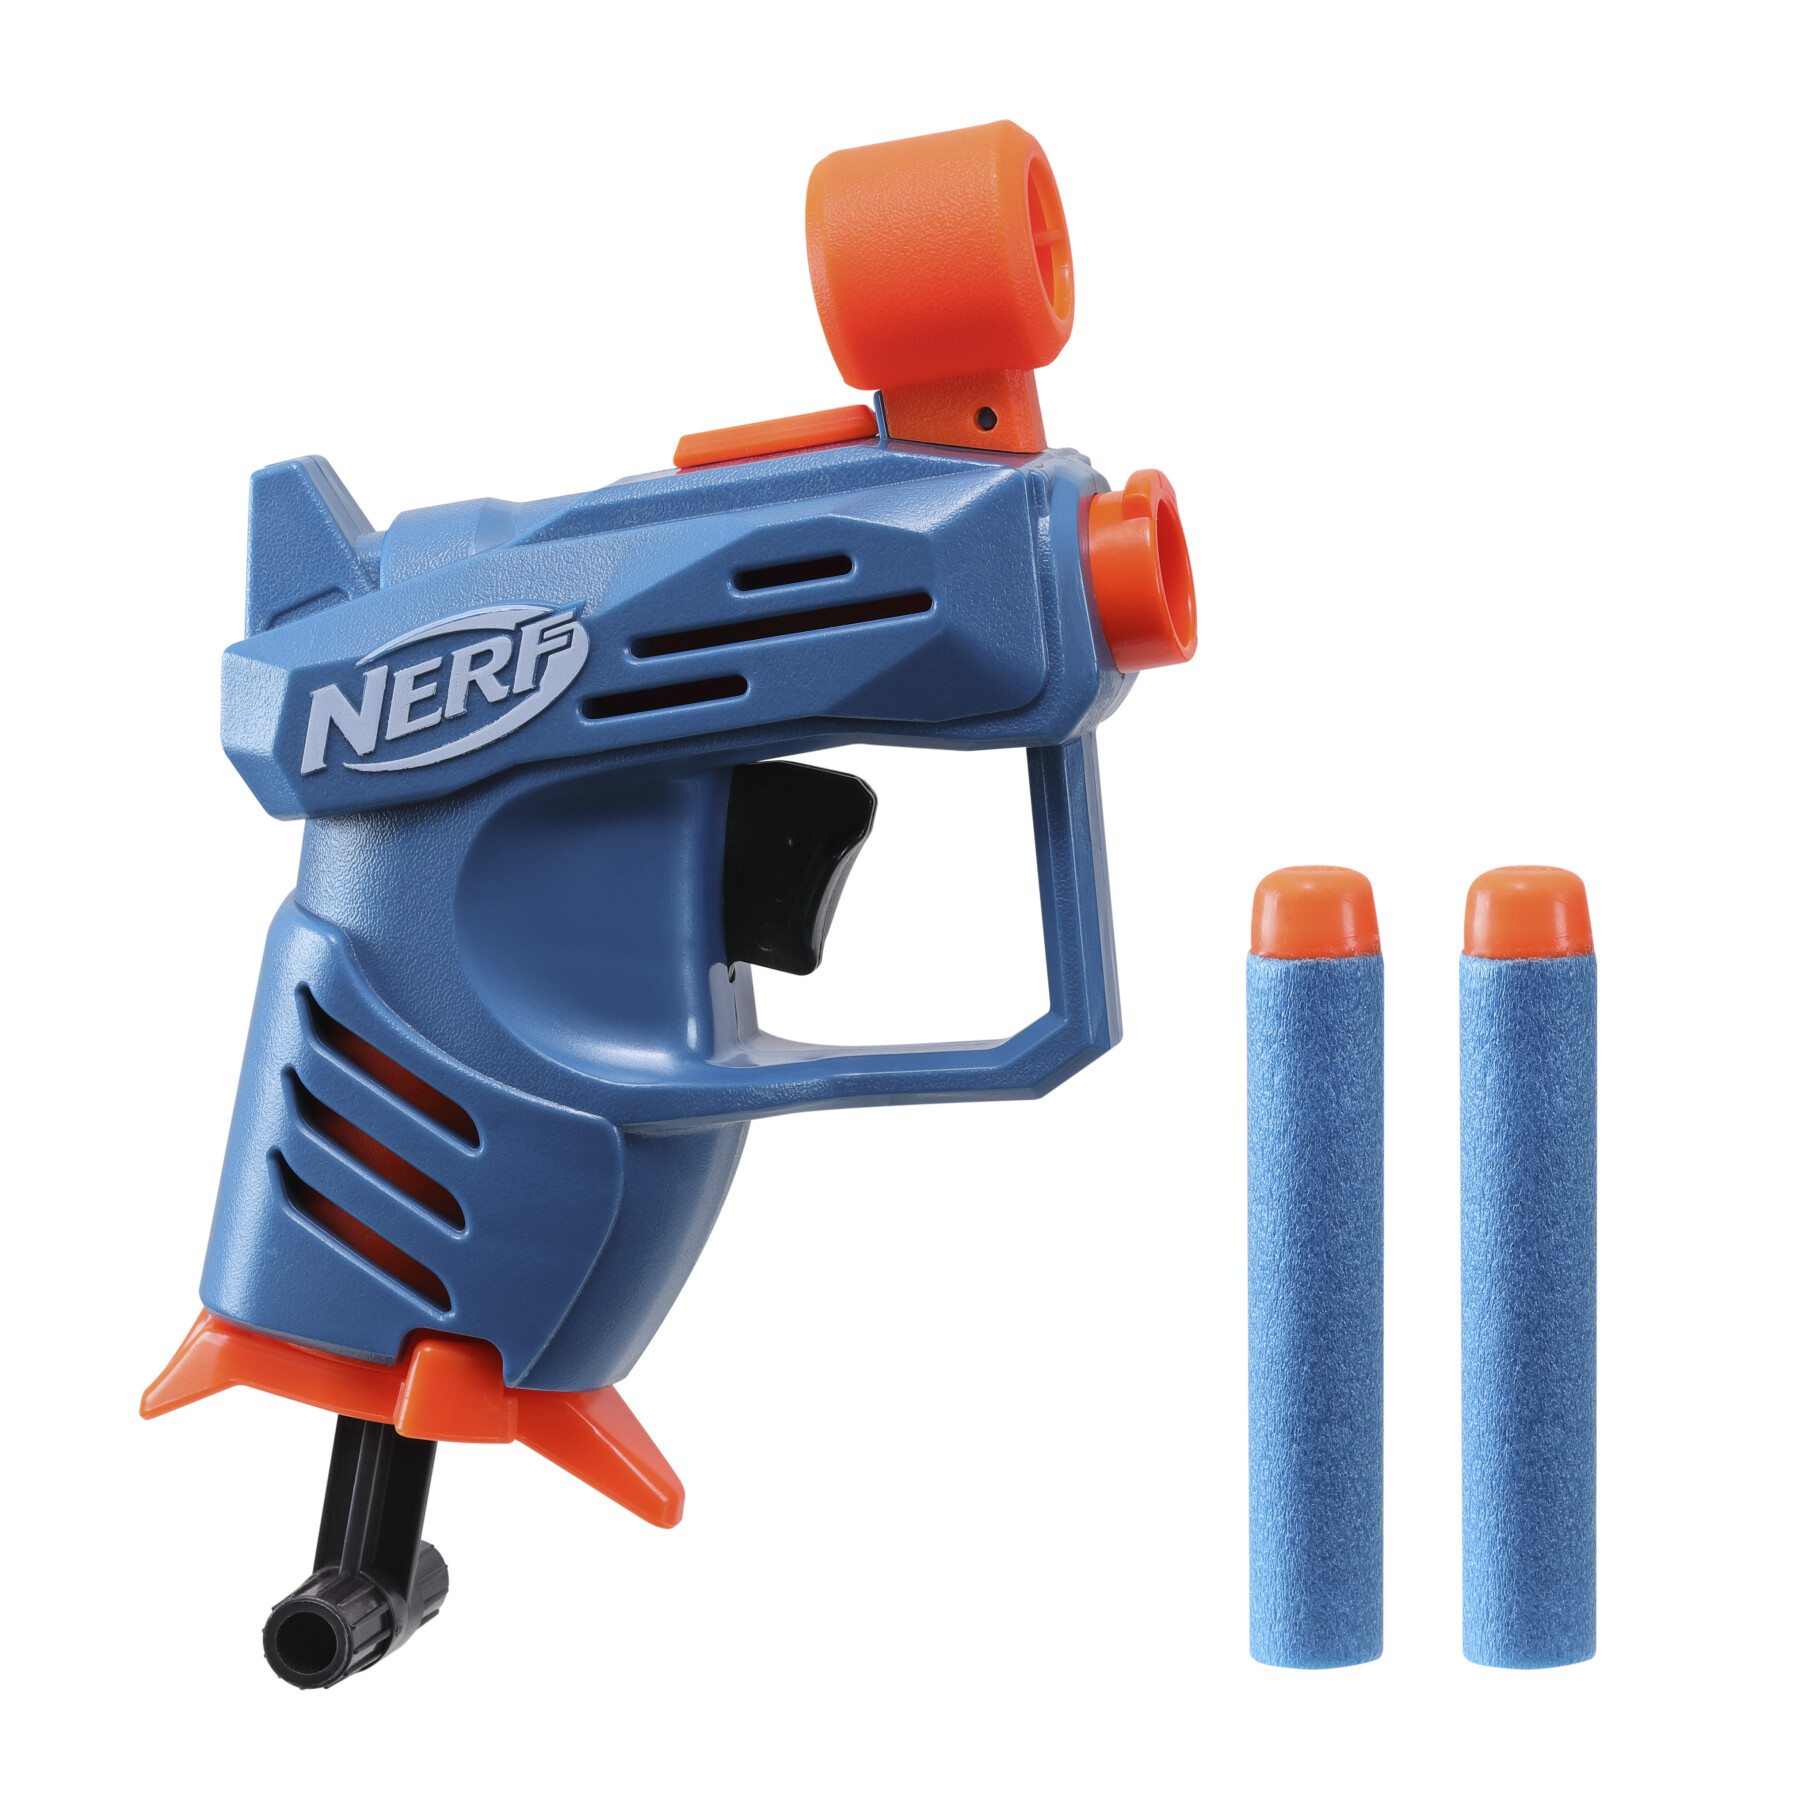 Nerf elite 2.0 - blaster ace sd-1, con 2 dardi originali nerf elite e portadardi da 1 , per lanci furtivi, facile da usare - NERF